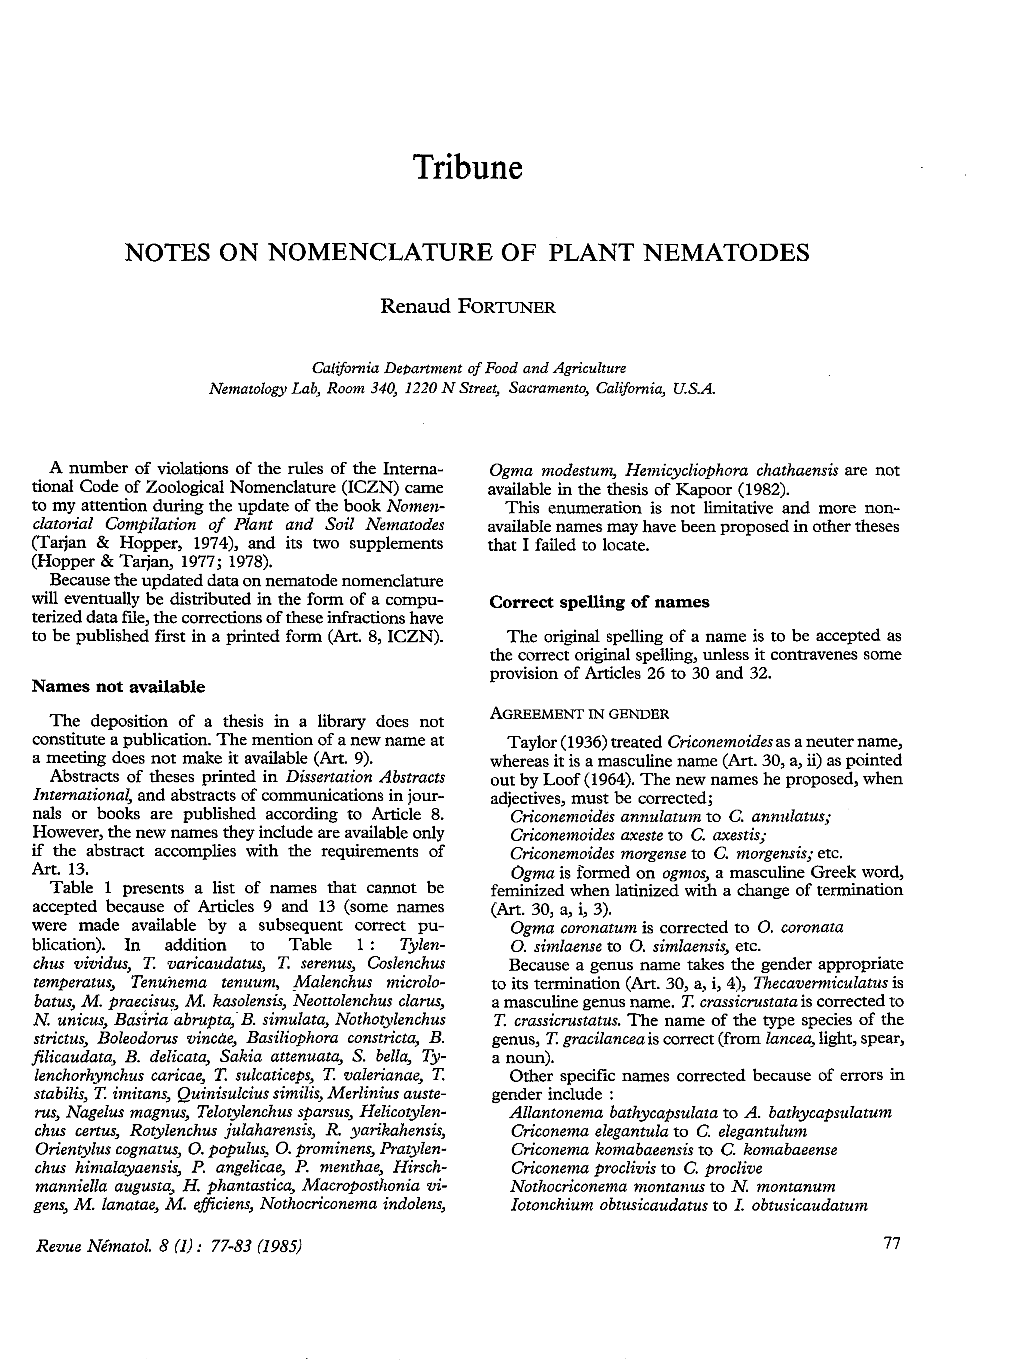 Notes on Nomenclature of Plant Nematodes